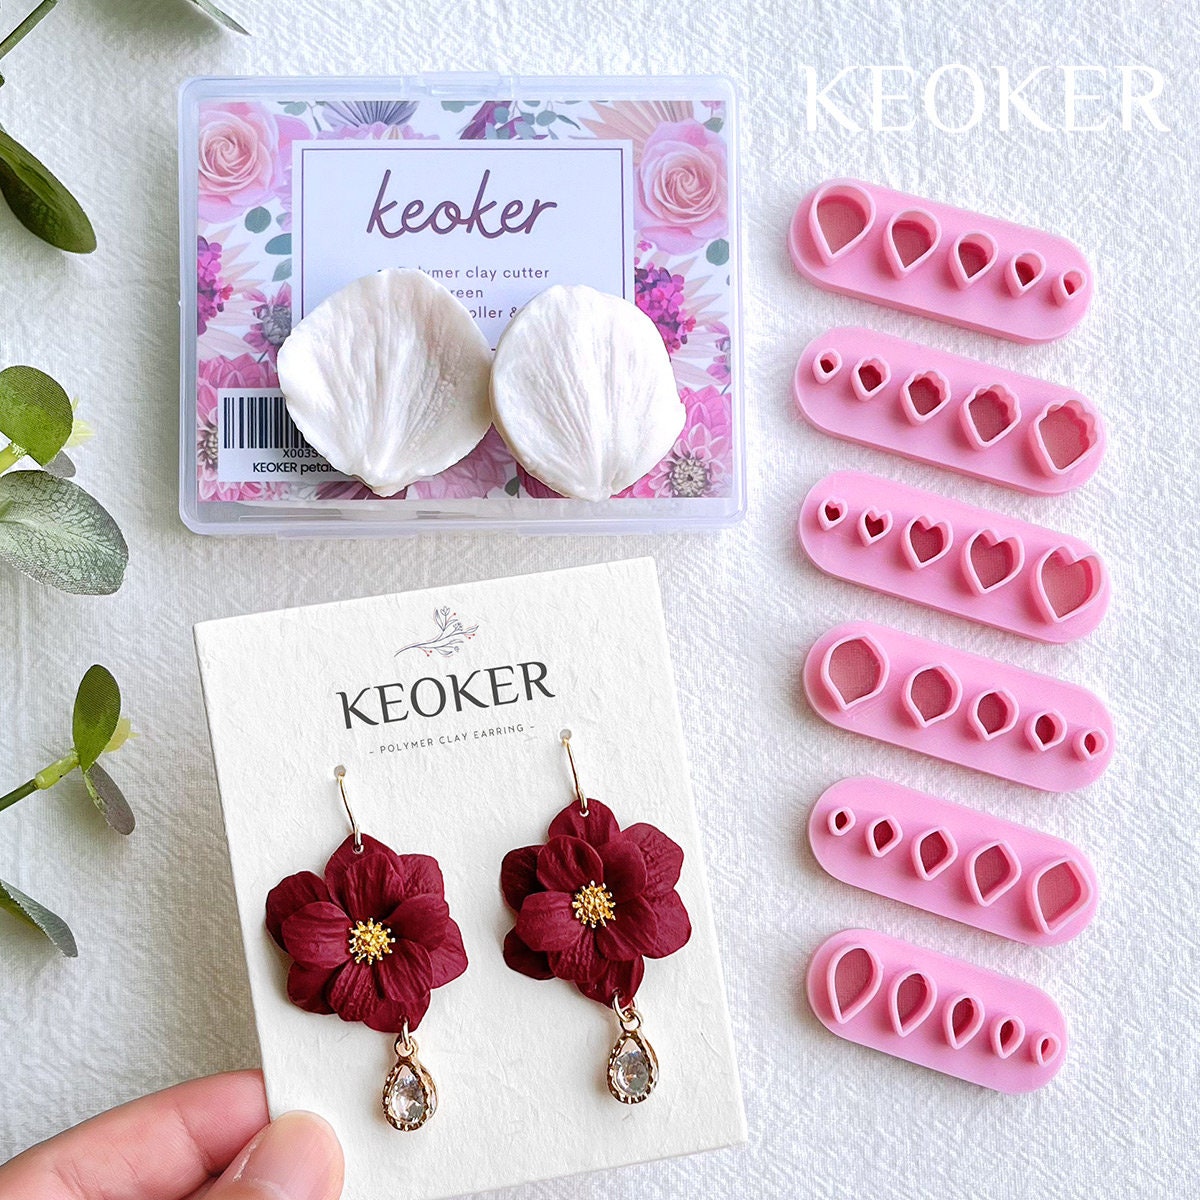 KEOKER Mini Flower Polymer Clay Molds(12 Pcs)